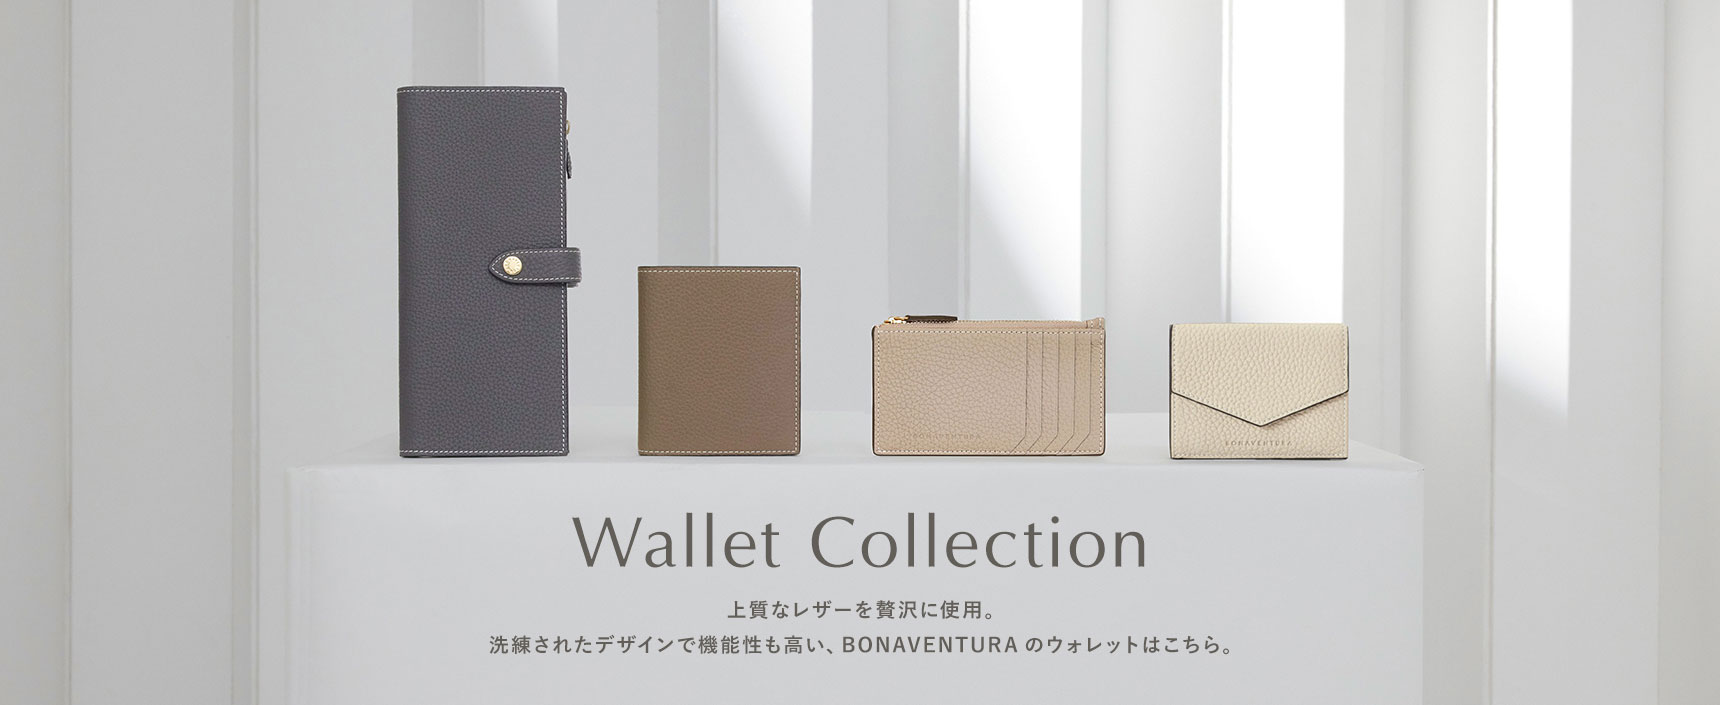 BONAVENTURA 財布/カードケース